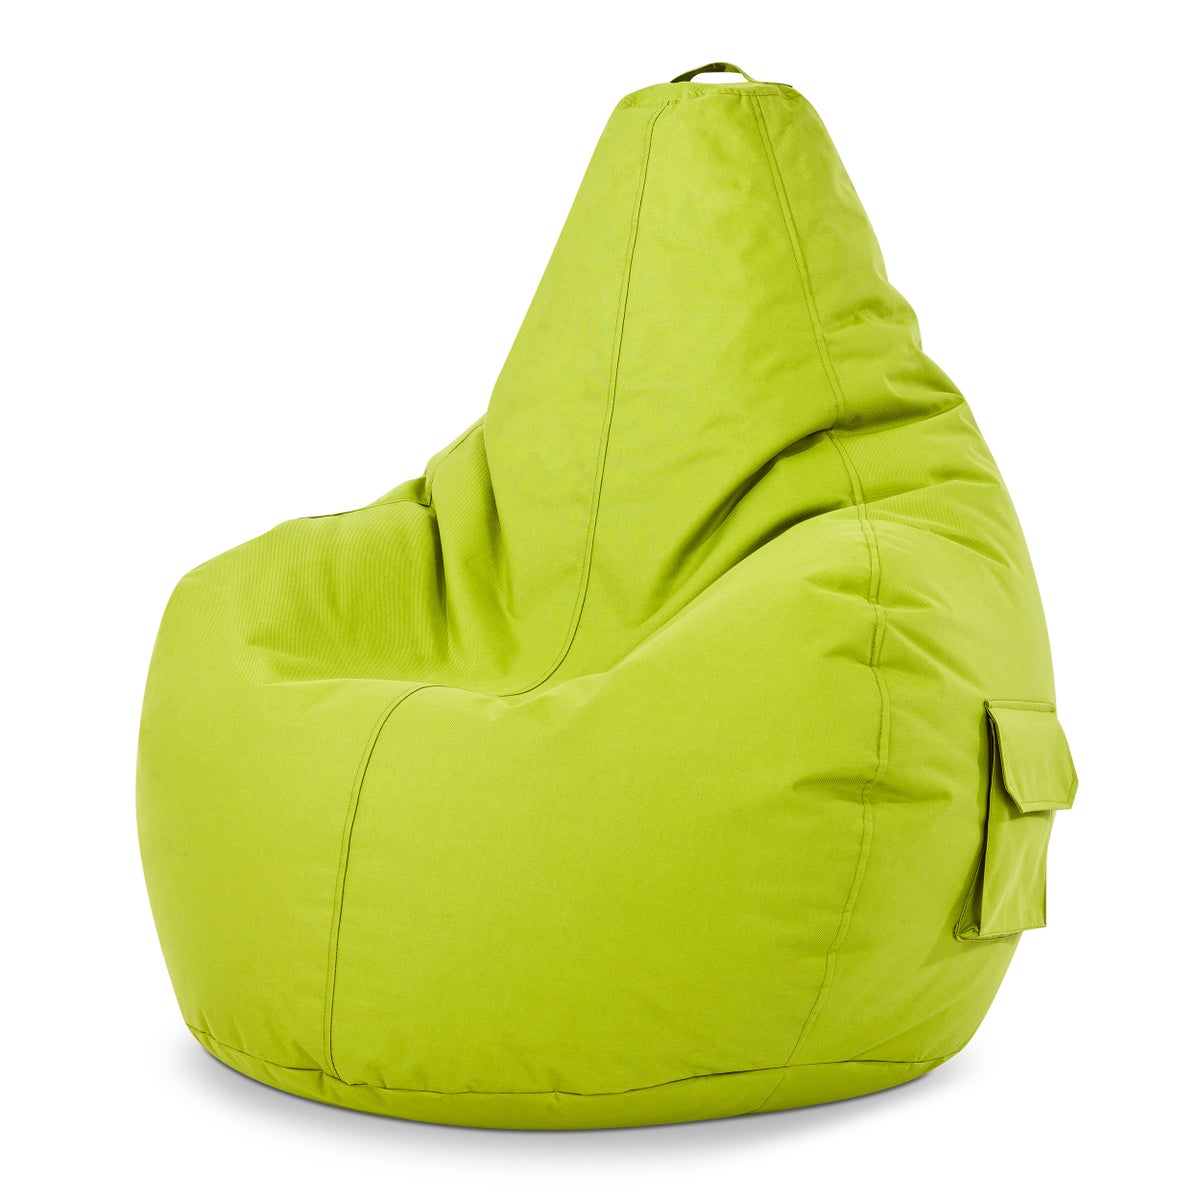 Green Bean© Sitzsack mit Rückenlehne 80x70x90cm - Gaming Chair mit 230L Füllung Kuschelig Weich Waschbar - Bean Bag Bodenkissen Lounge Chair Sitzhocker Relax-Sessel Gamer Gamingstuhl Hellgrün